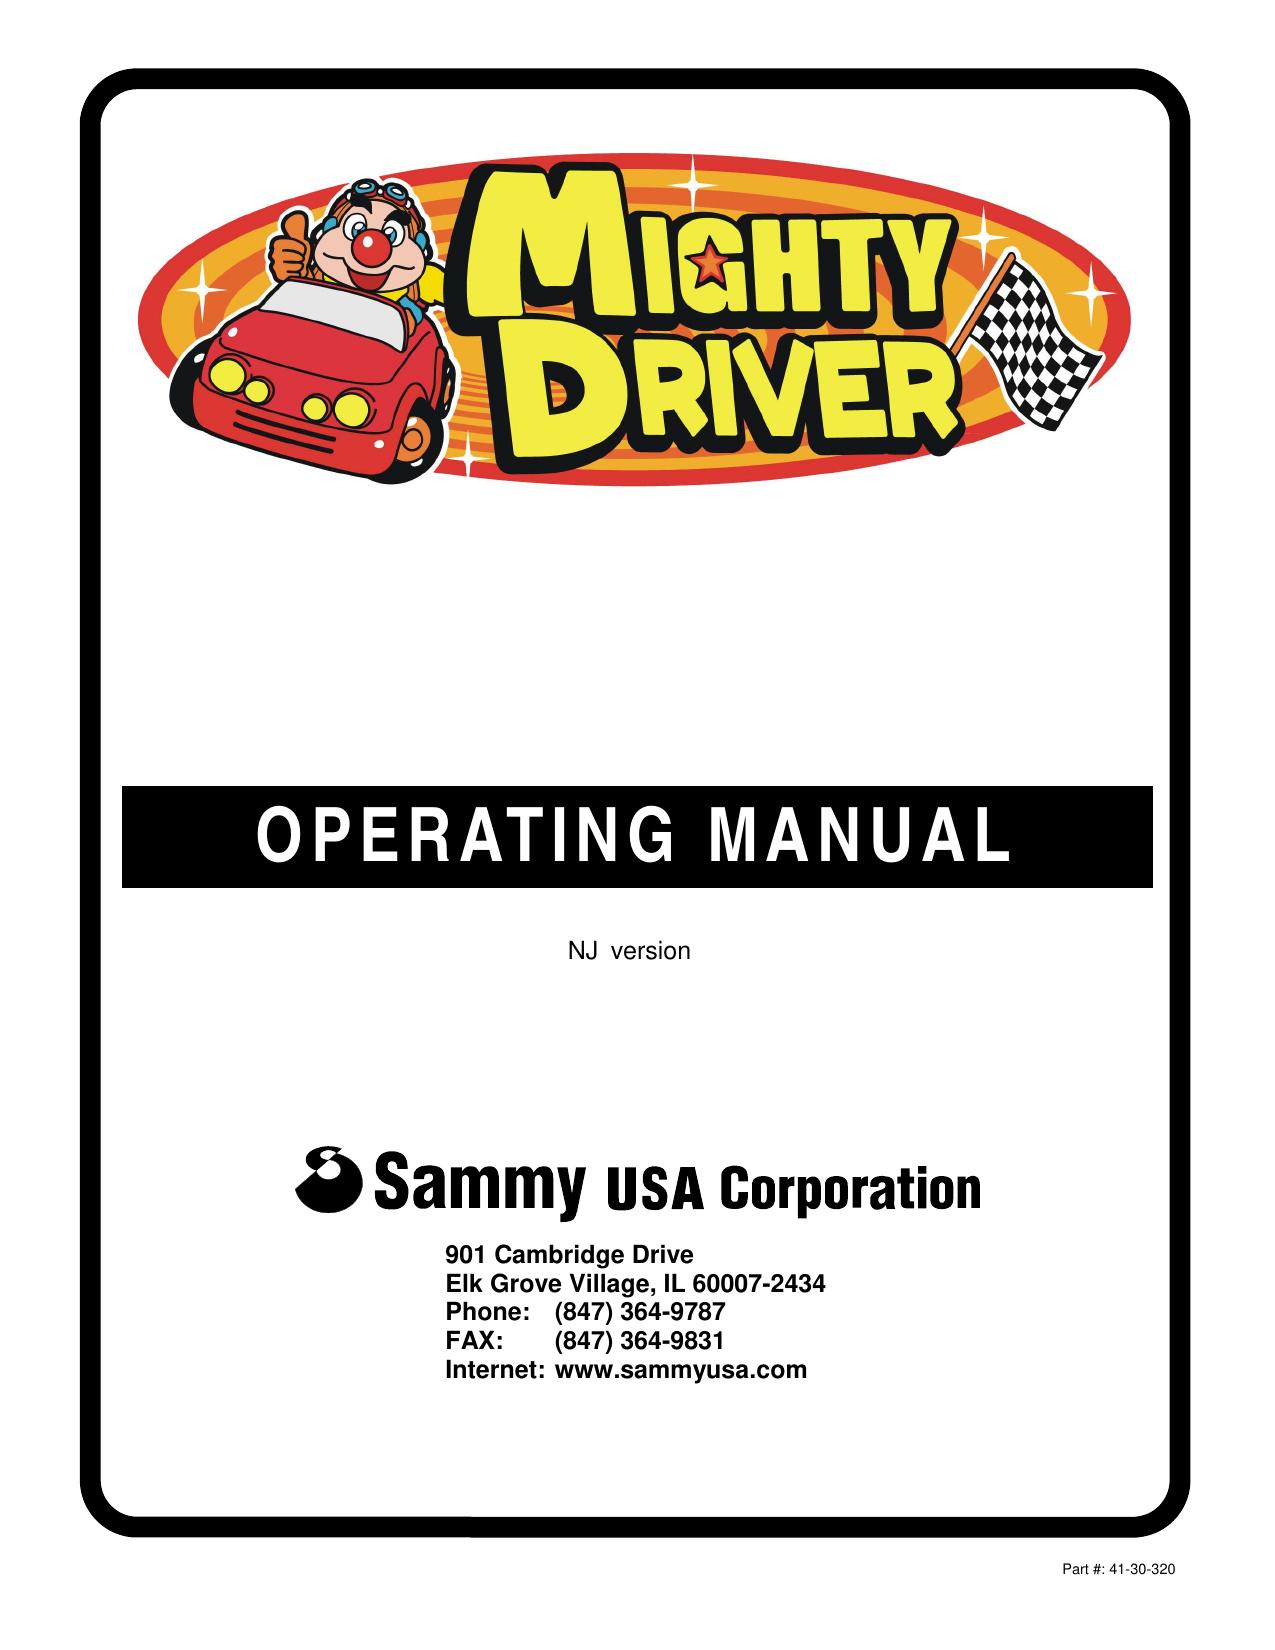 091202 NJ EP-ROM Mighty Driver Operating Manual.pub